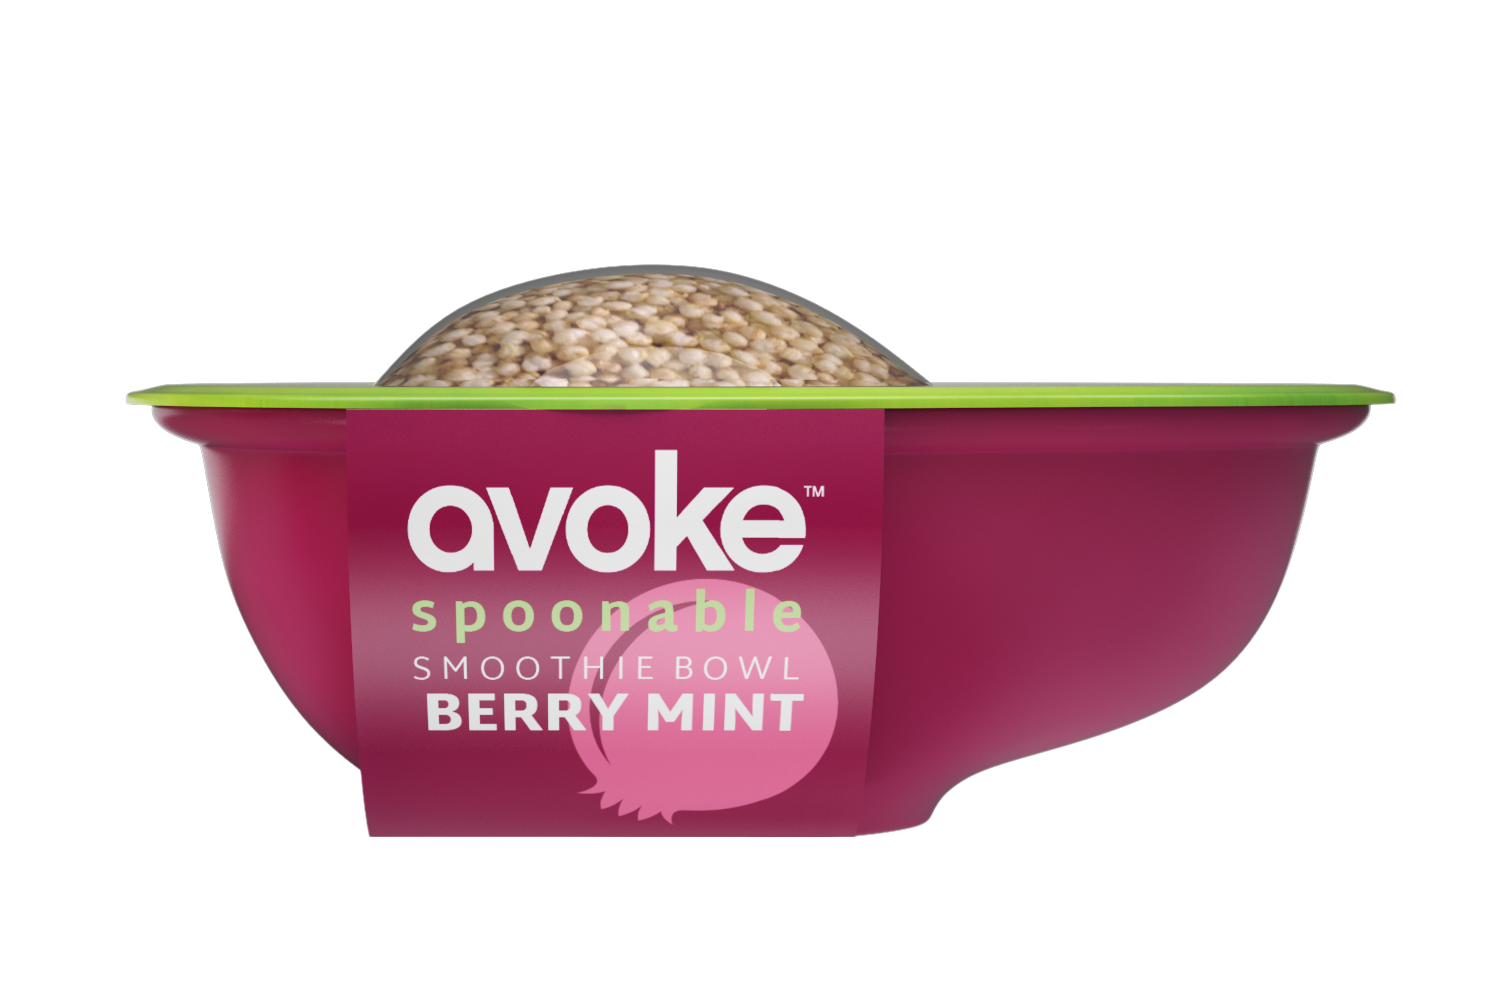 Berry Mint Spoonable